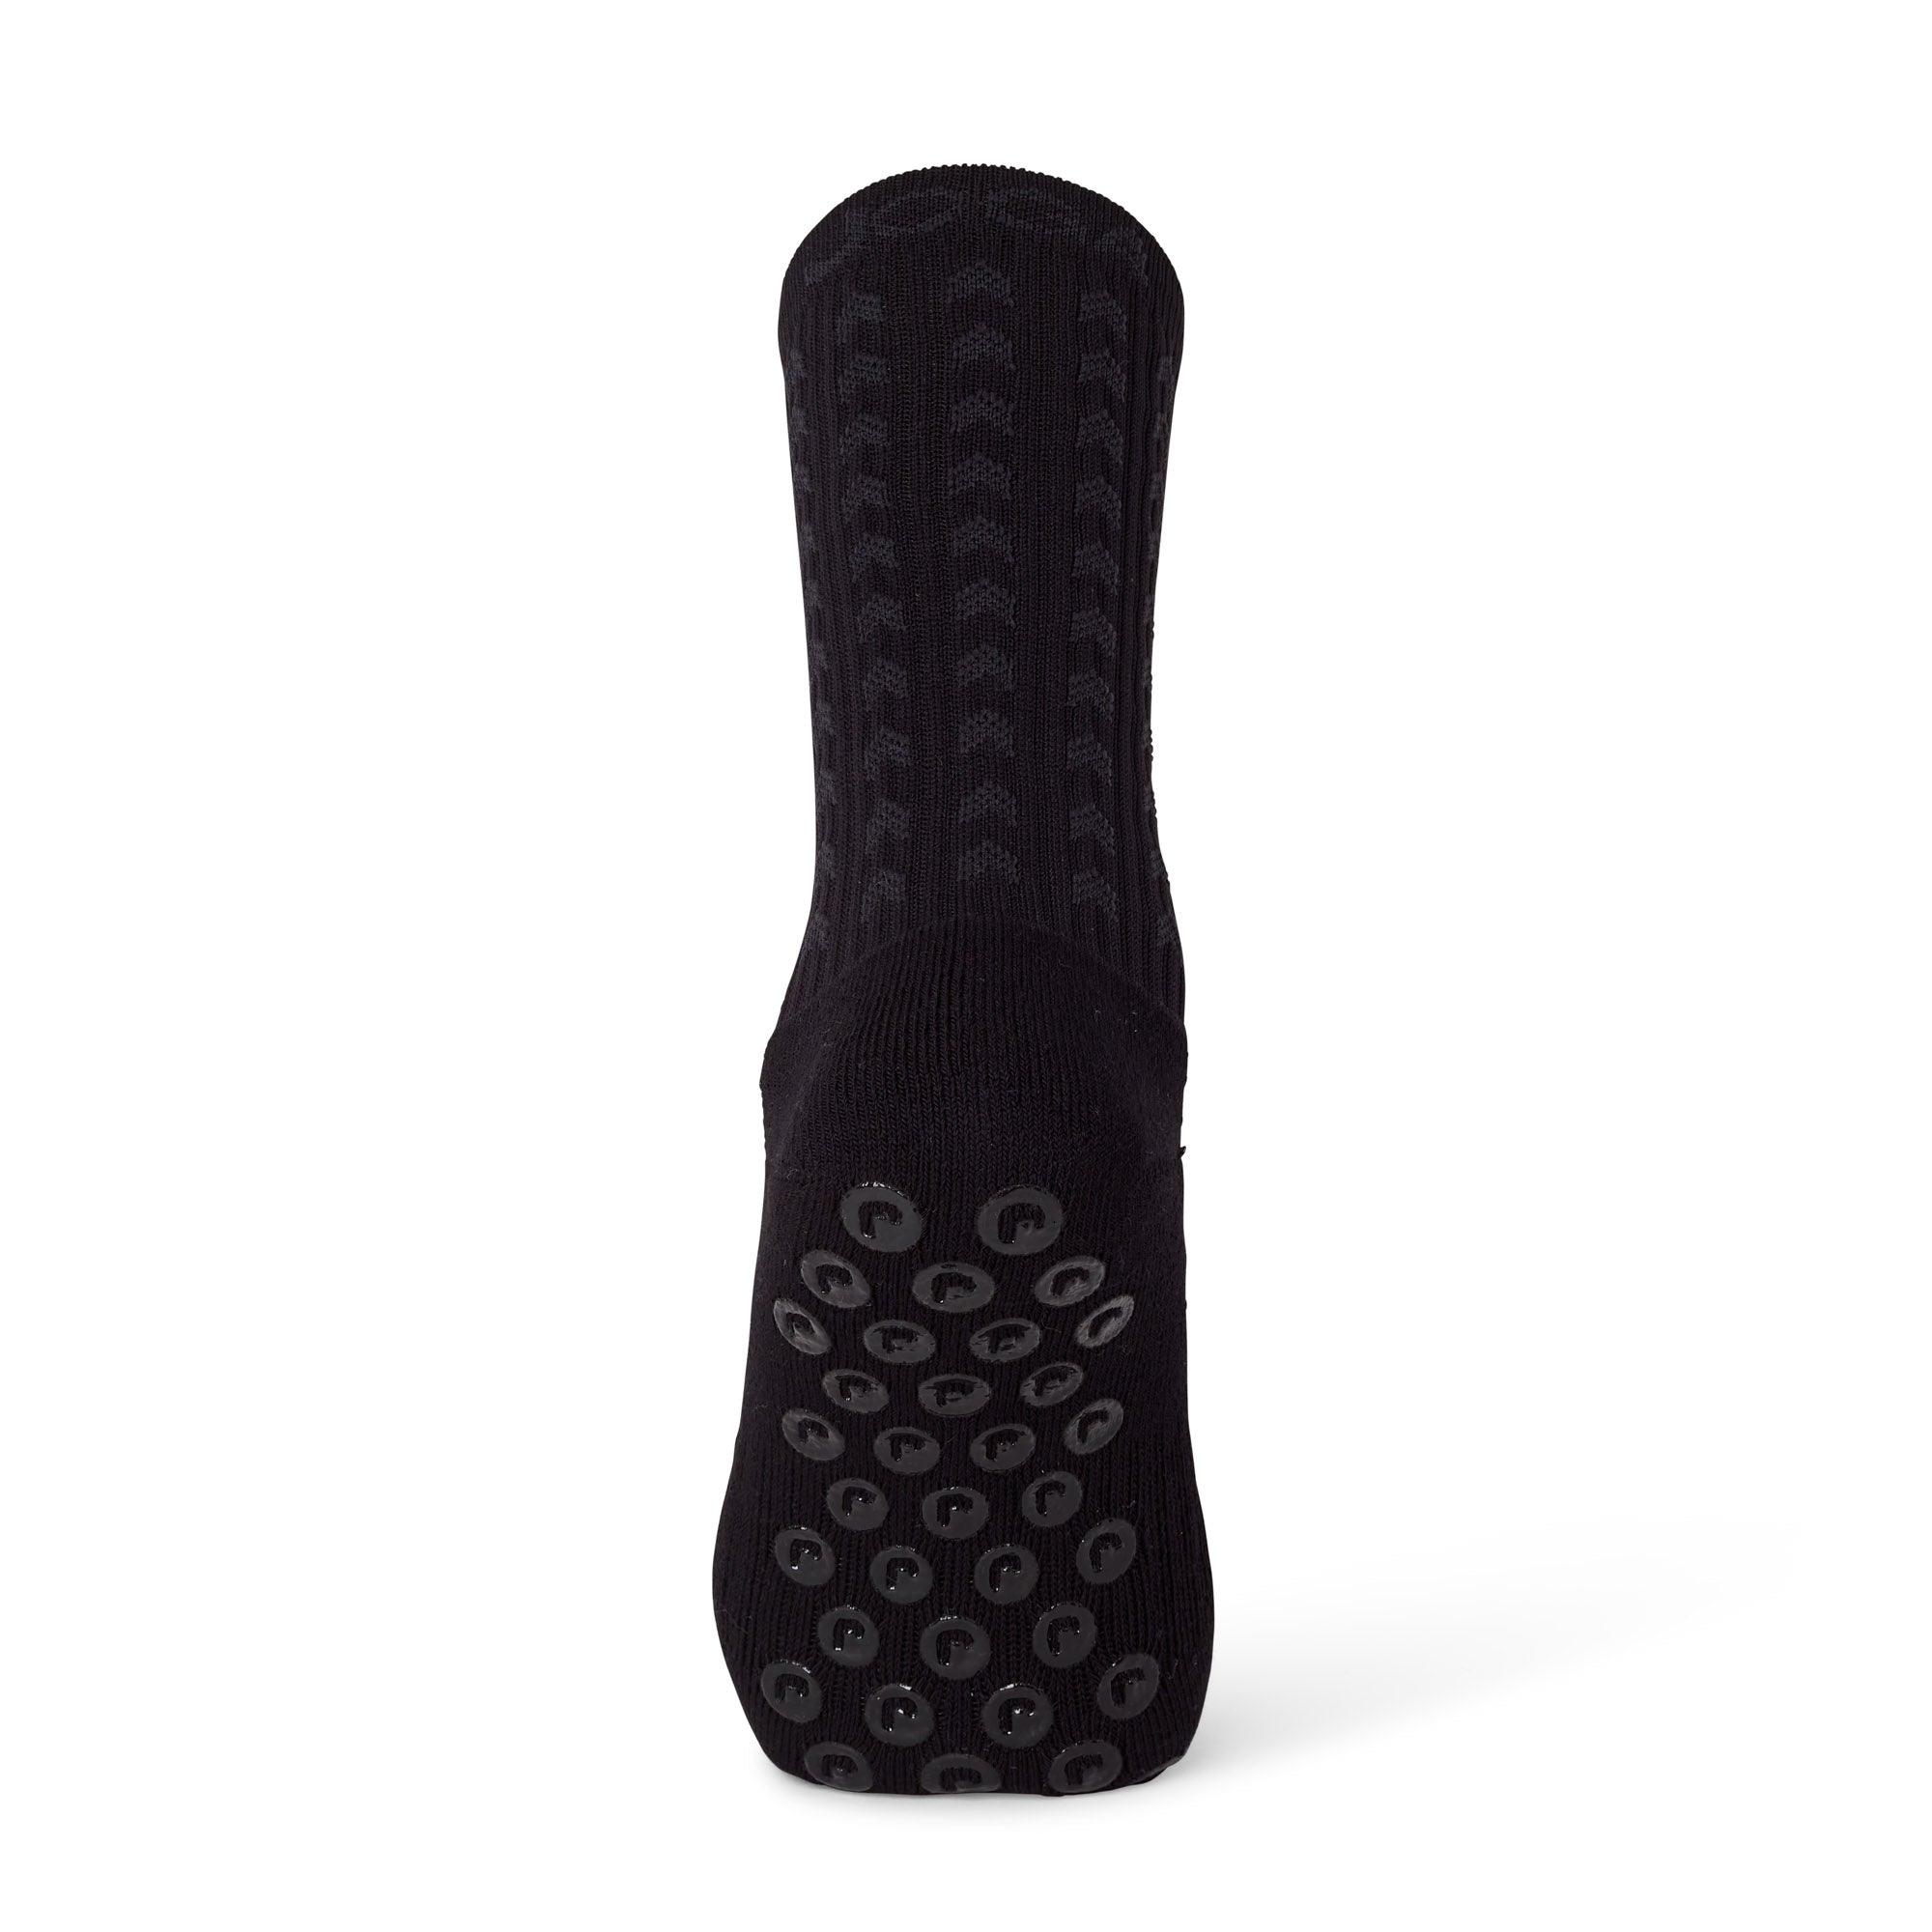 Black grip yoga socks - Wildwood, Bude